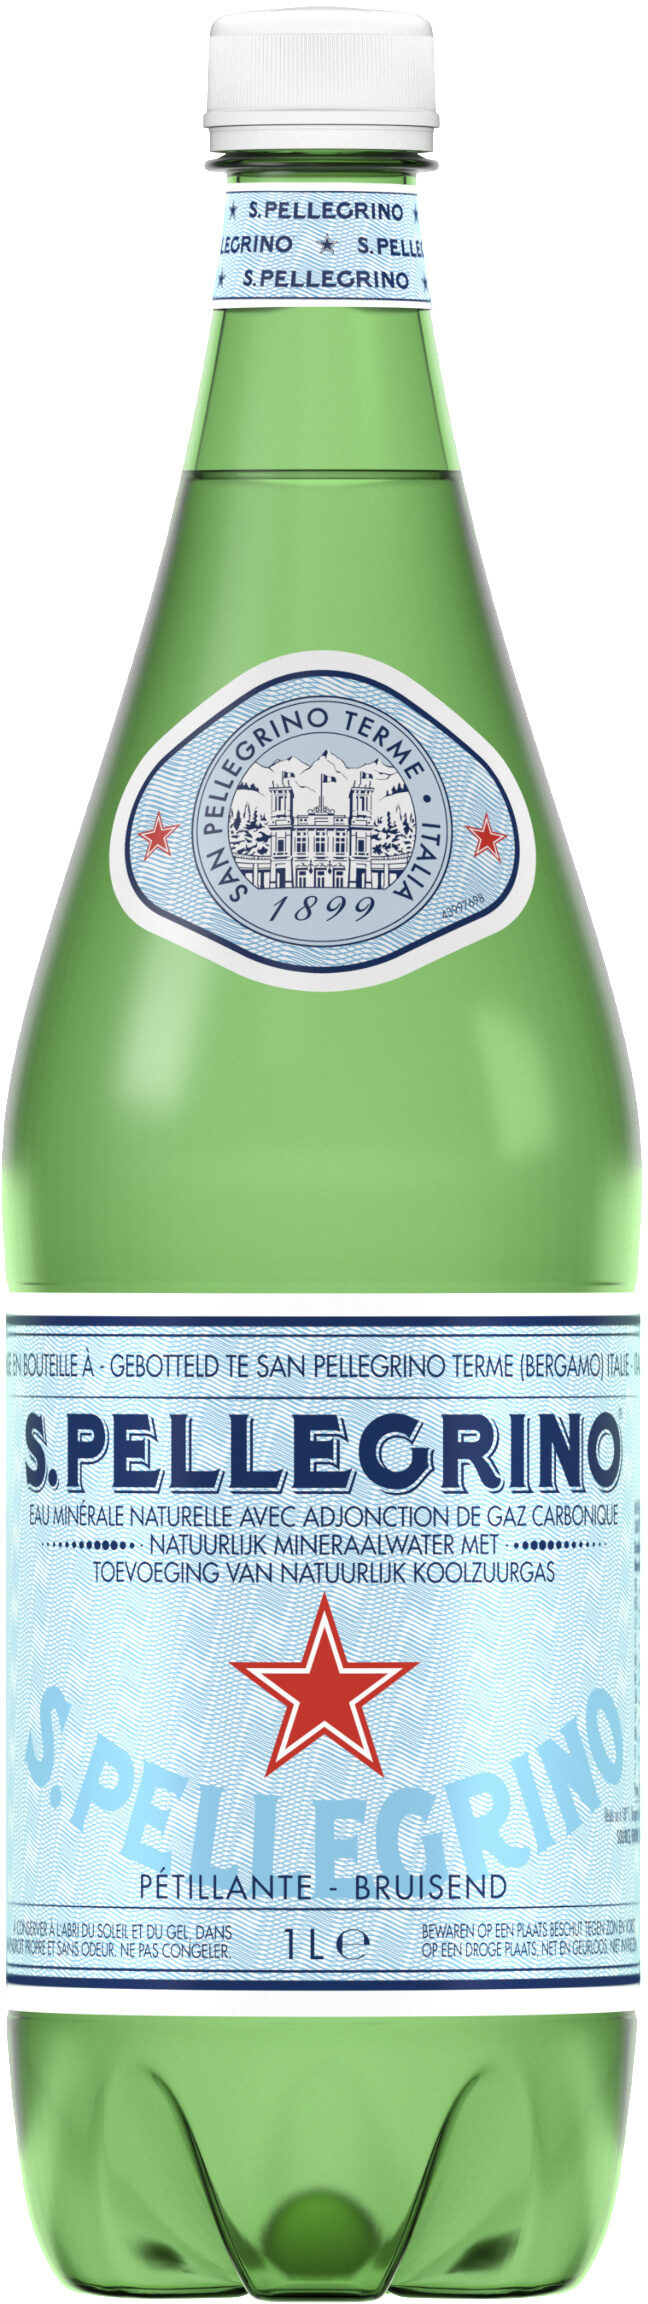 S. Pellegrino Water - Produkt - en